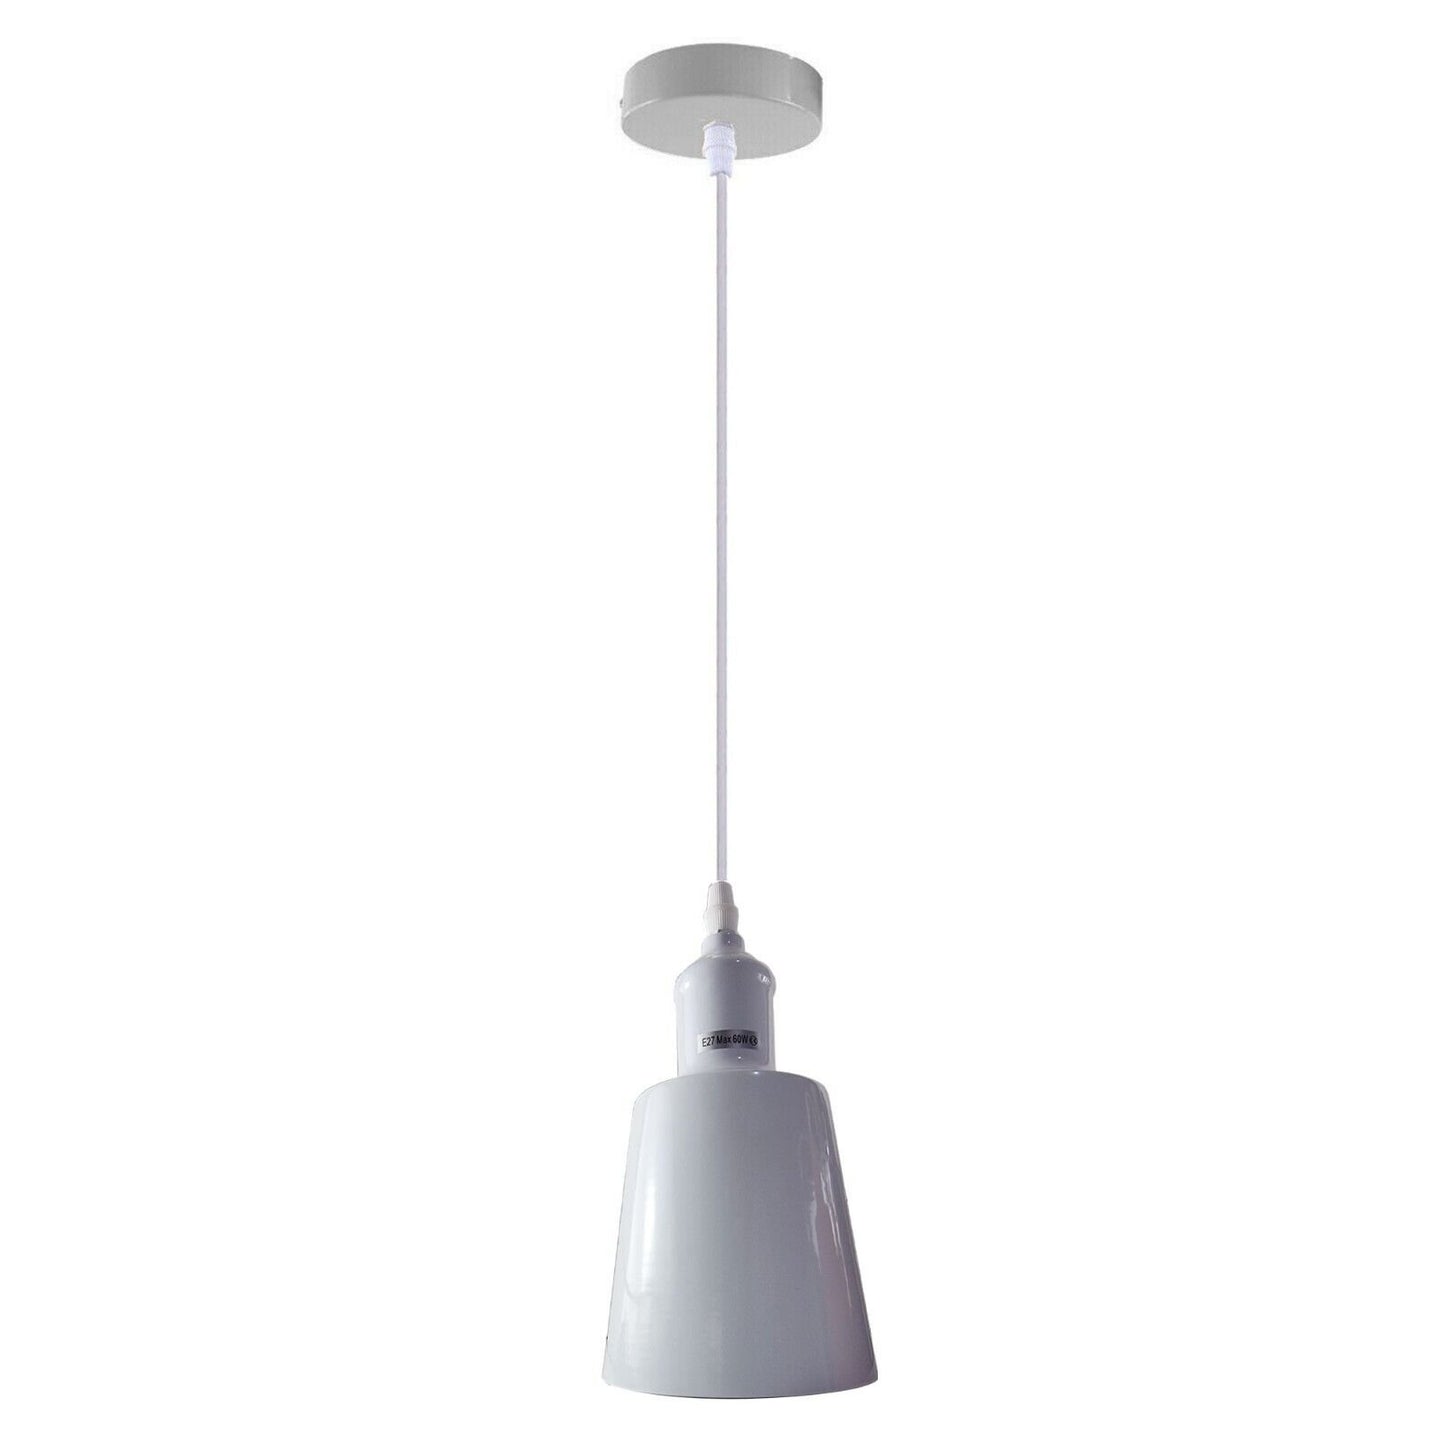  Metal Ceiling Lamp Shade Shade Chandelier Retro Pendant Light